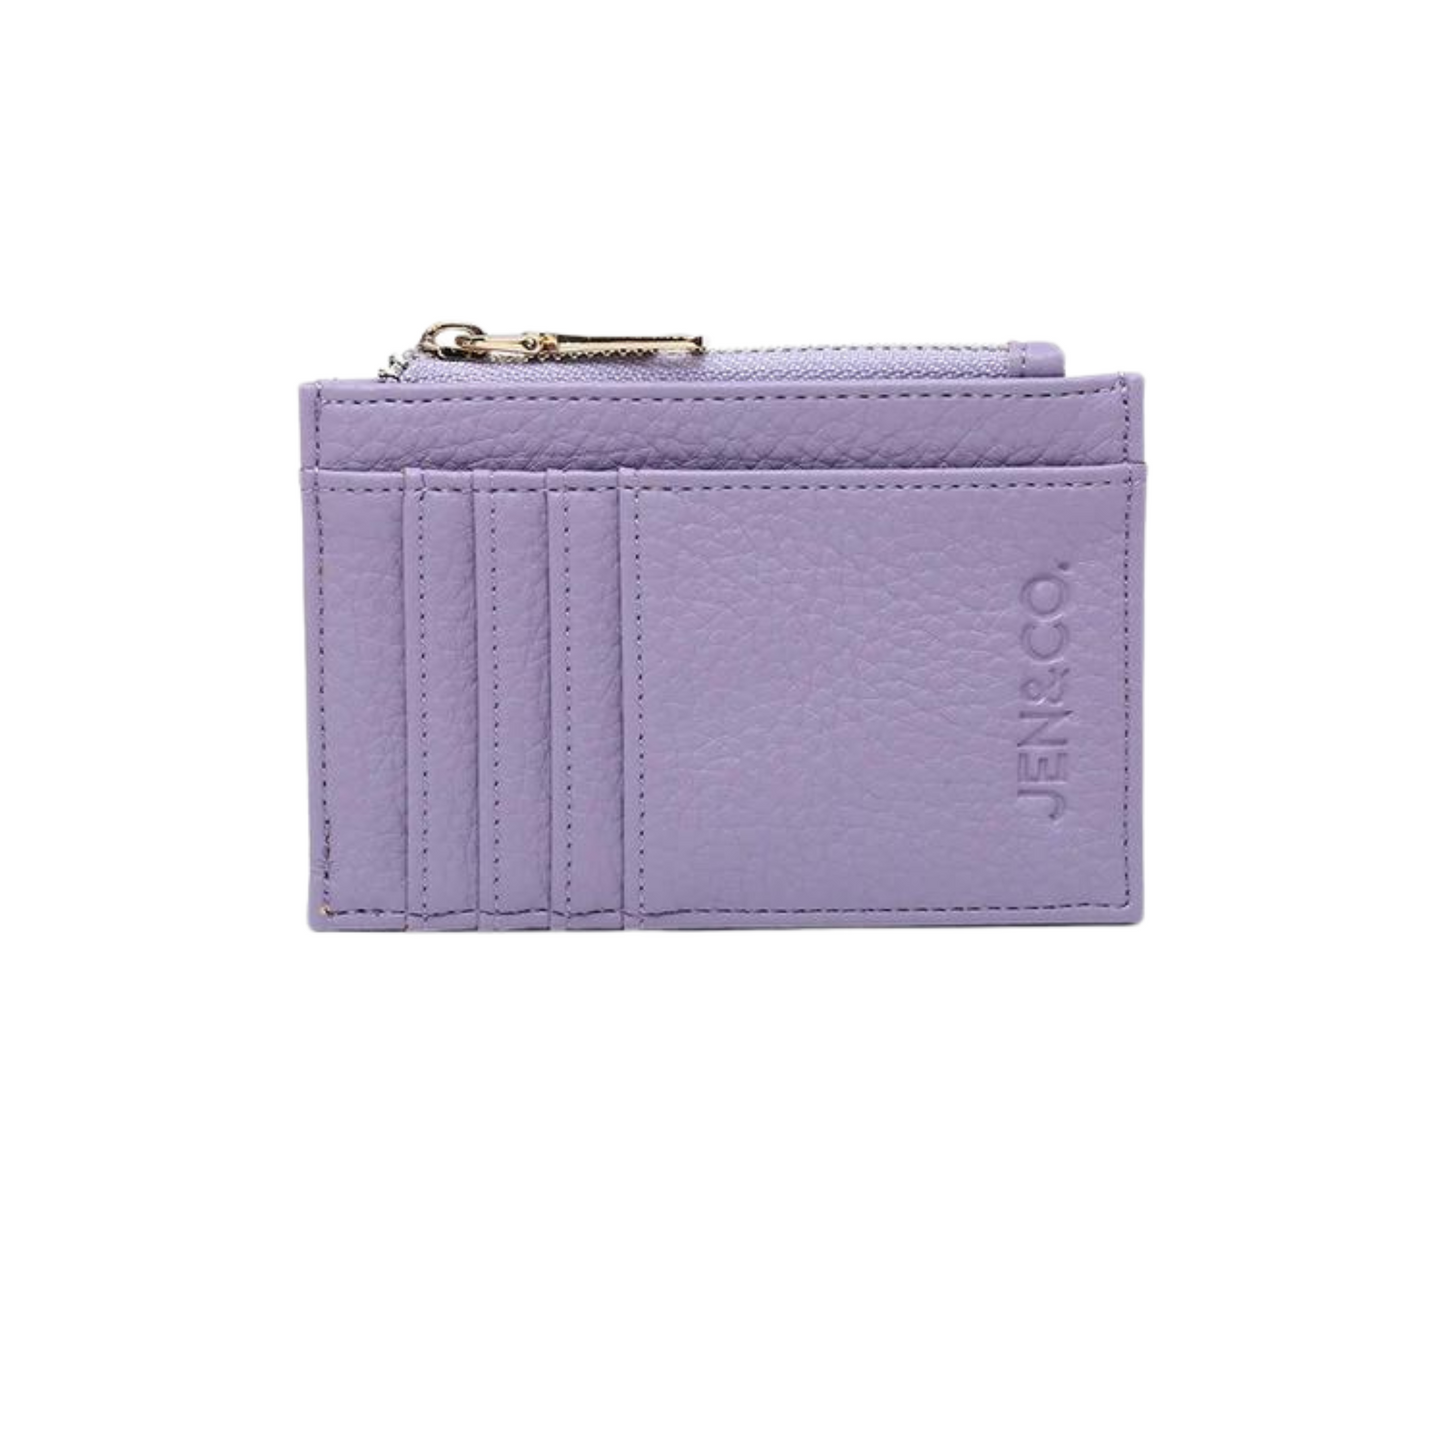 Sia Wallet in lavender